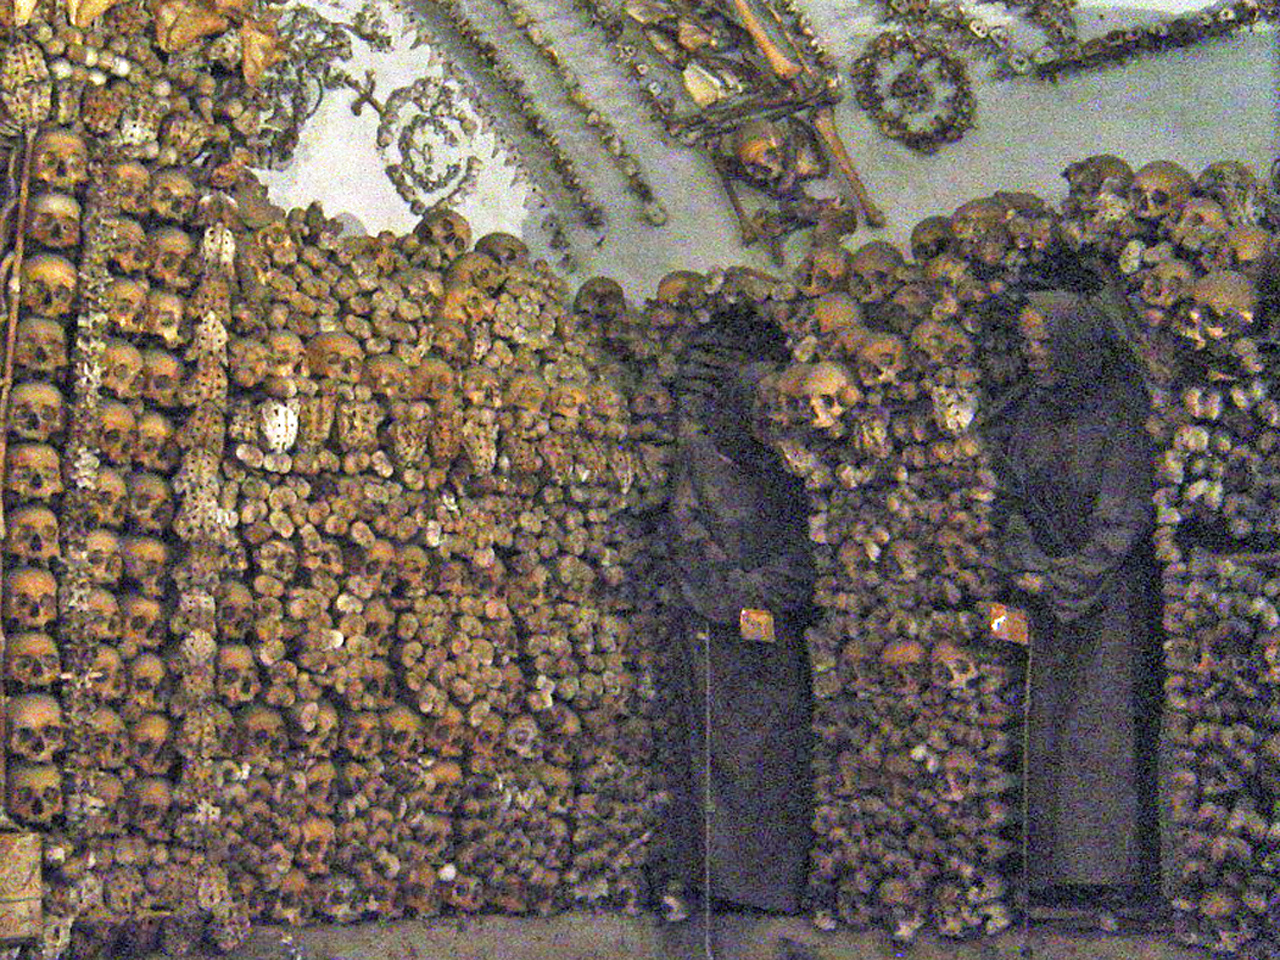 LIFE Knebel Skull Room in Capuchin Crypt